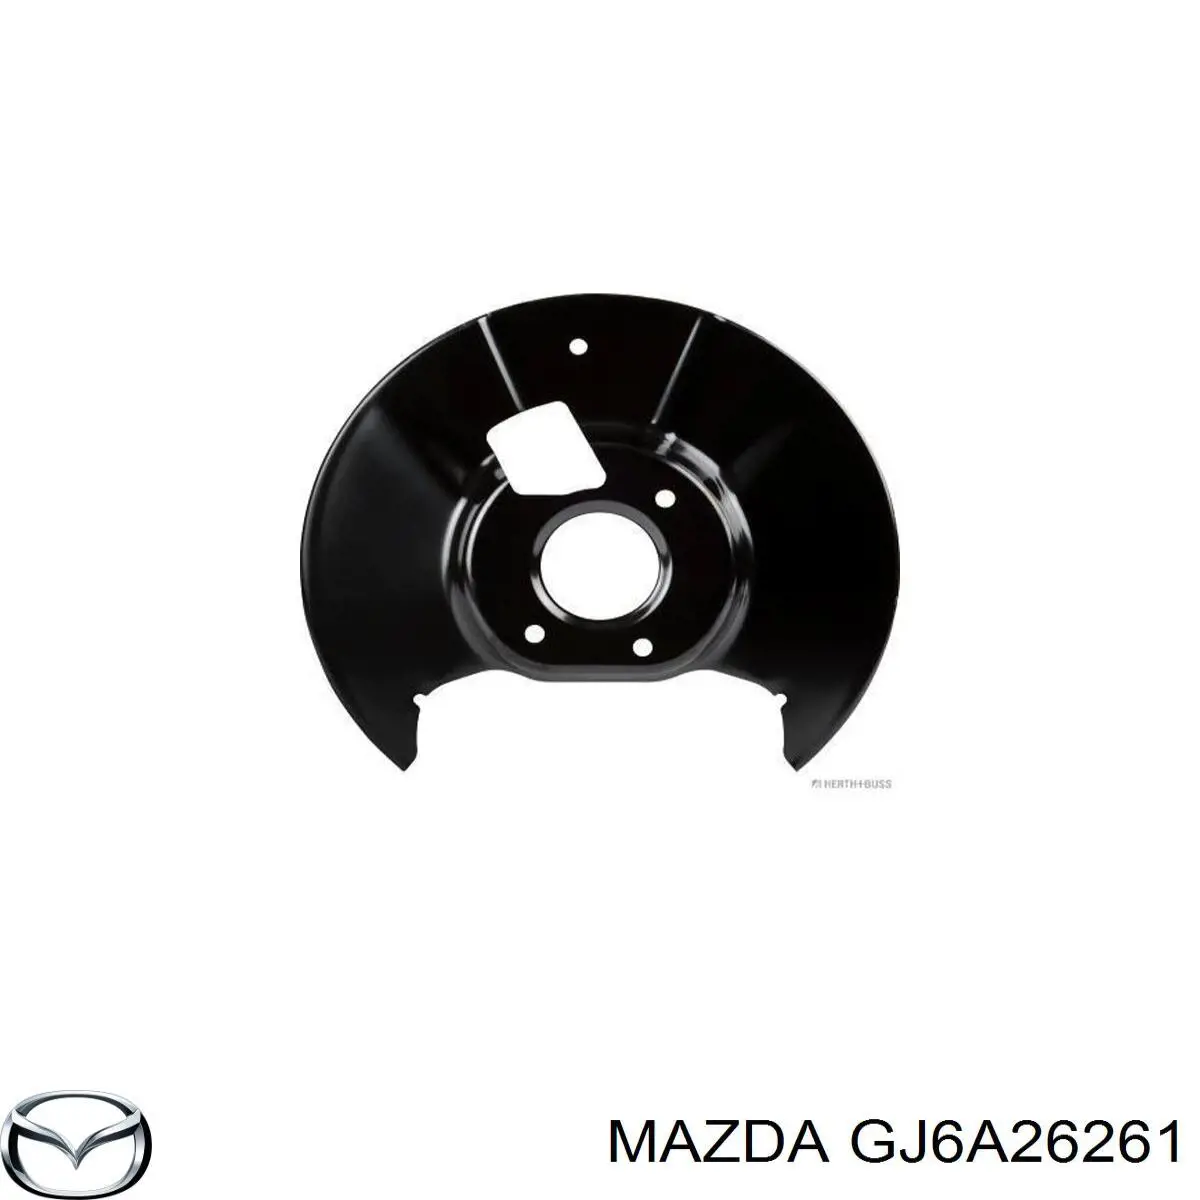 GJ6A26261A Mazda chapa protectora contra salpicaduras, disco de freno trasero derecho